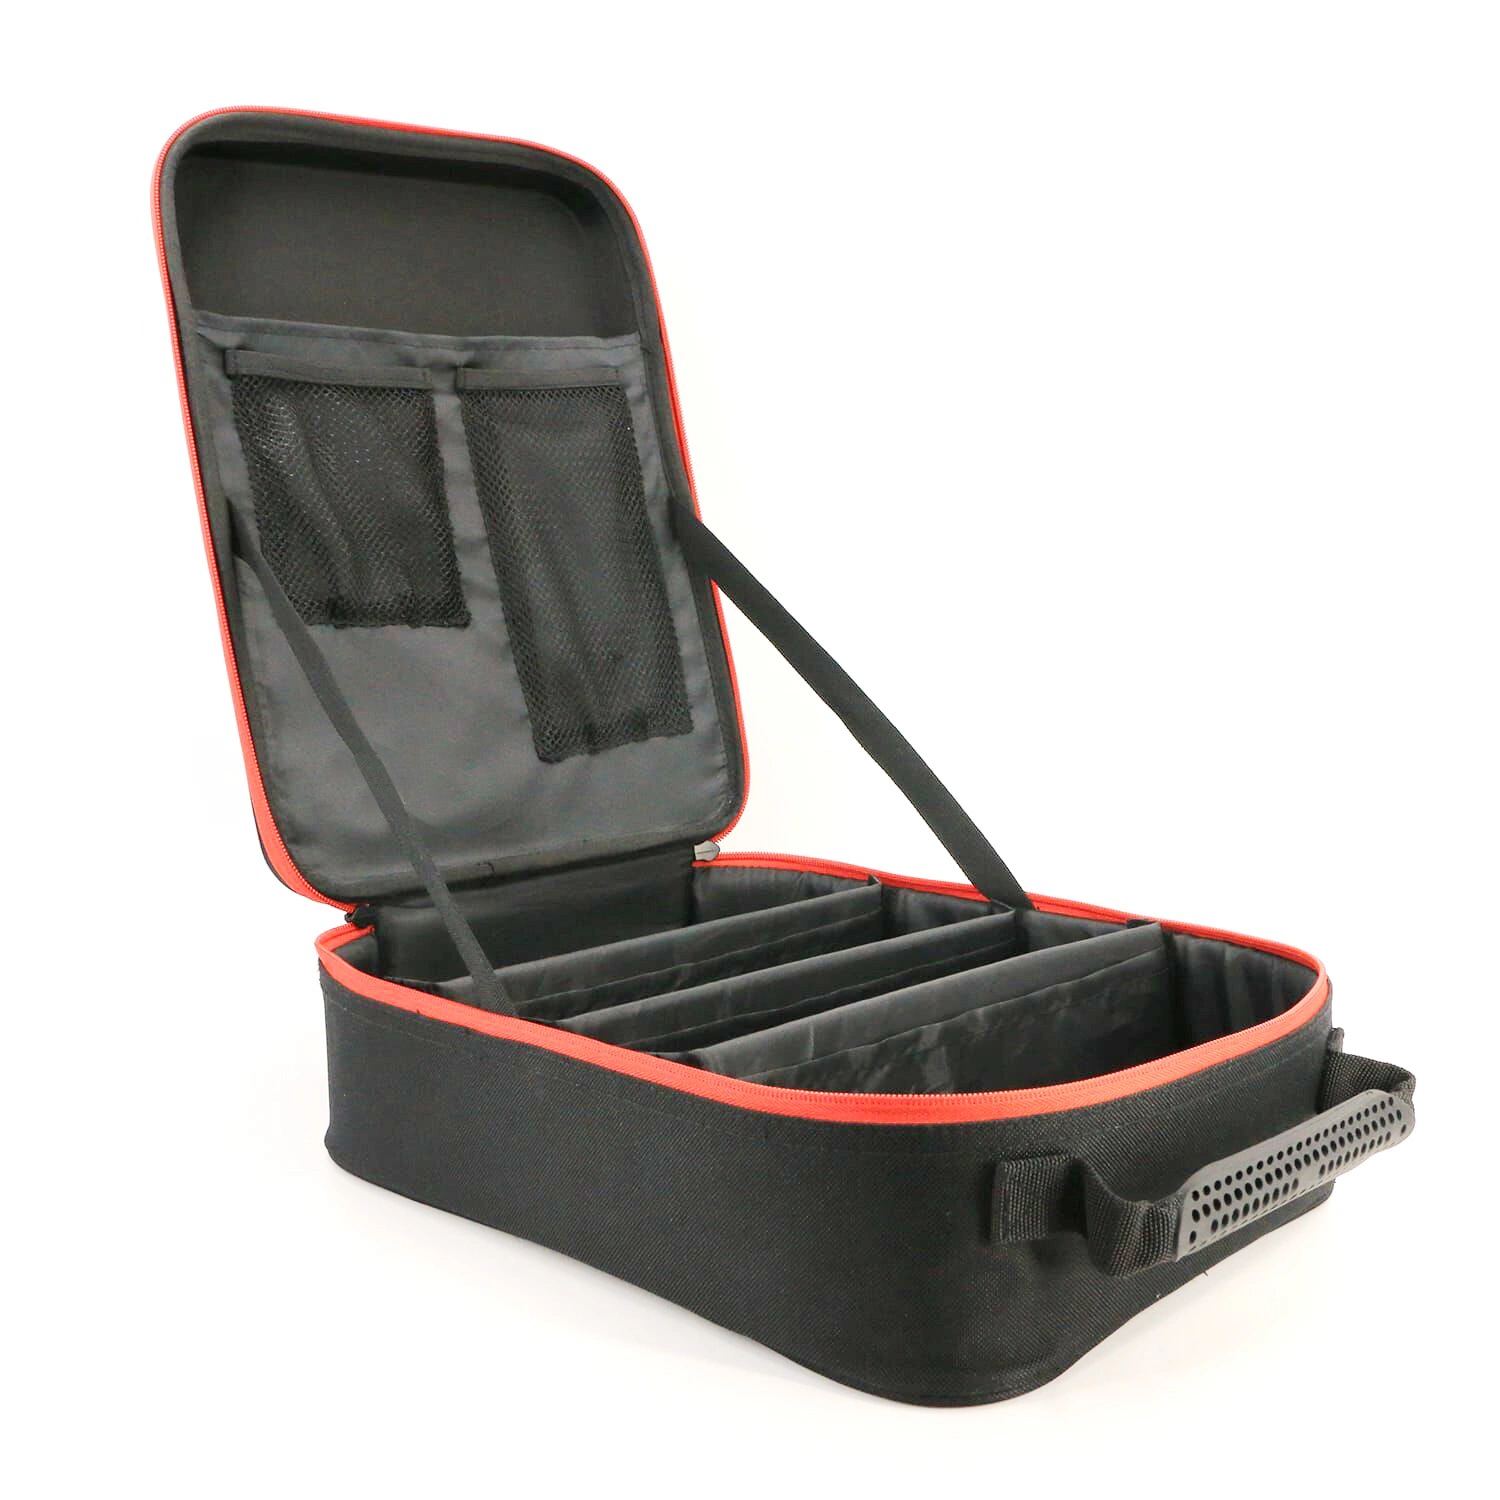 Hard Shell EVA Goggle Case Organizer Bag Holder Box for Skiing Sunglasses